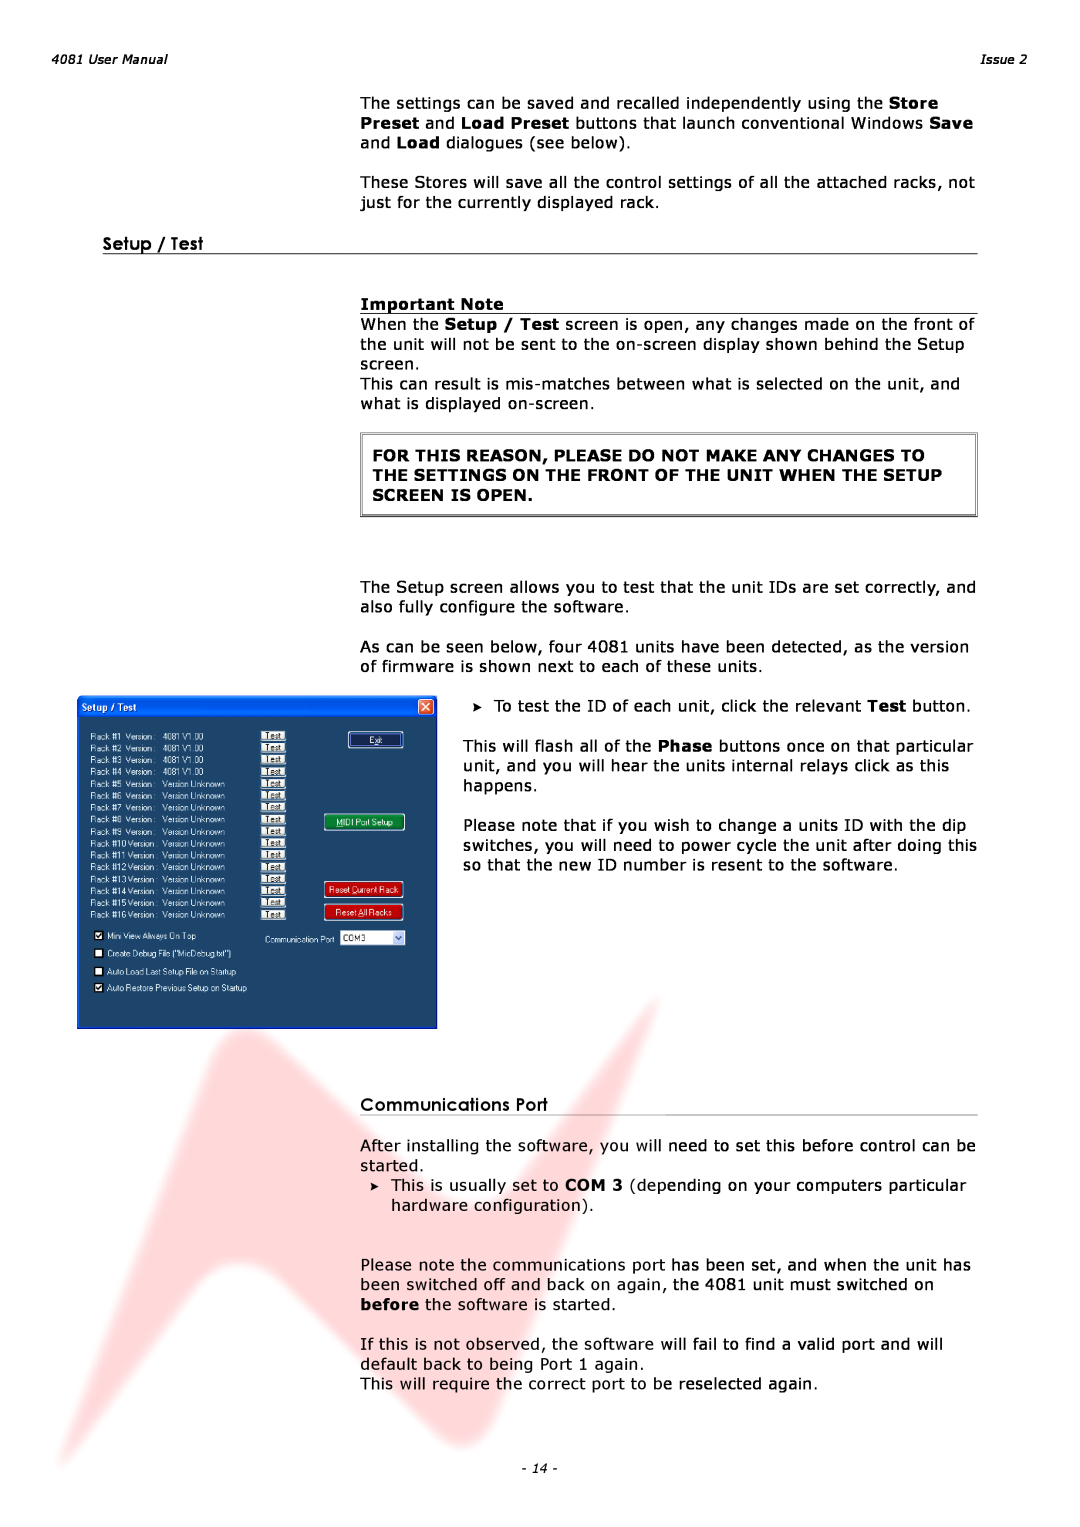 AMS 4081 user manual Setup / Test, Communications Port 